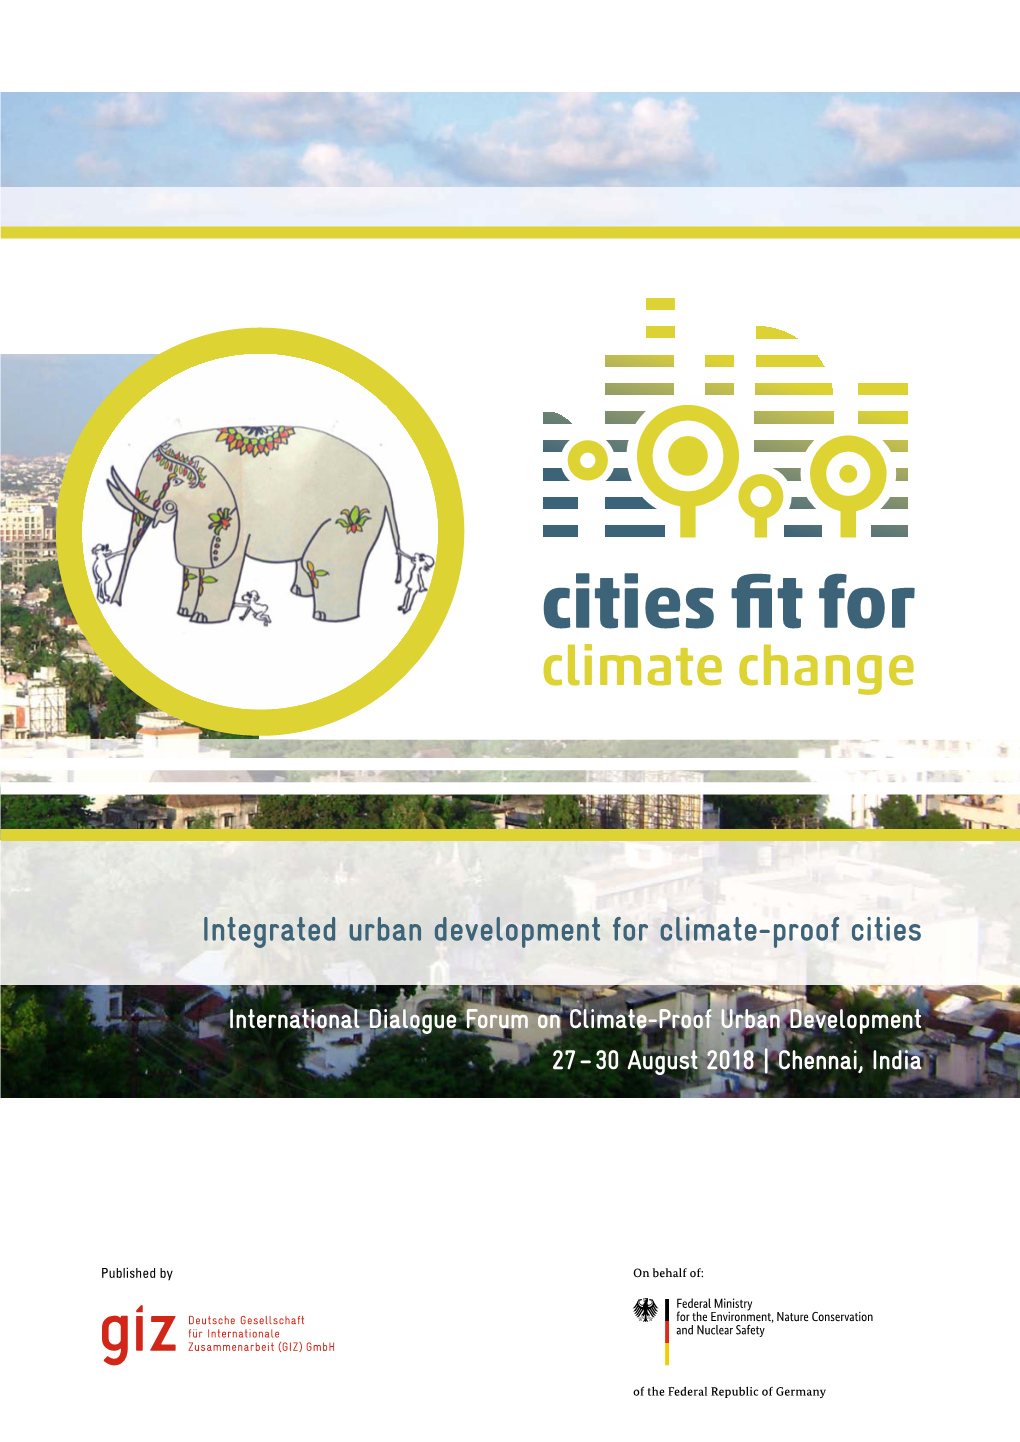 Chennai Dialogue Forum: Integrated Urban Development for Climate